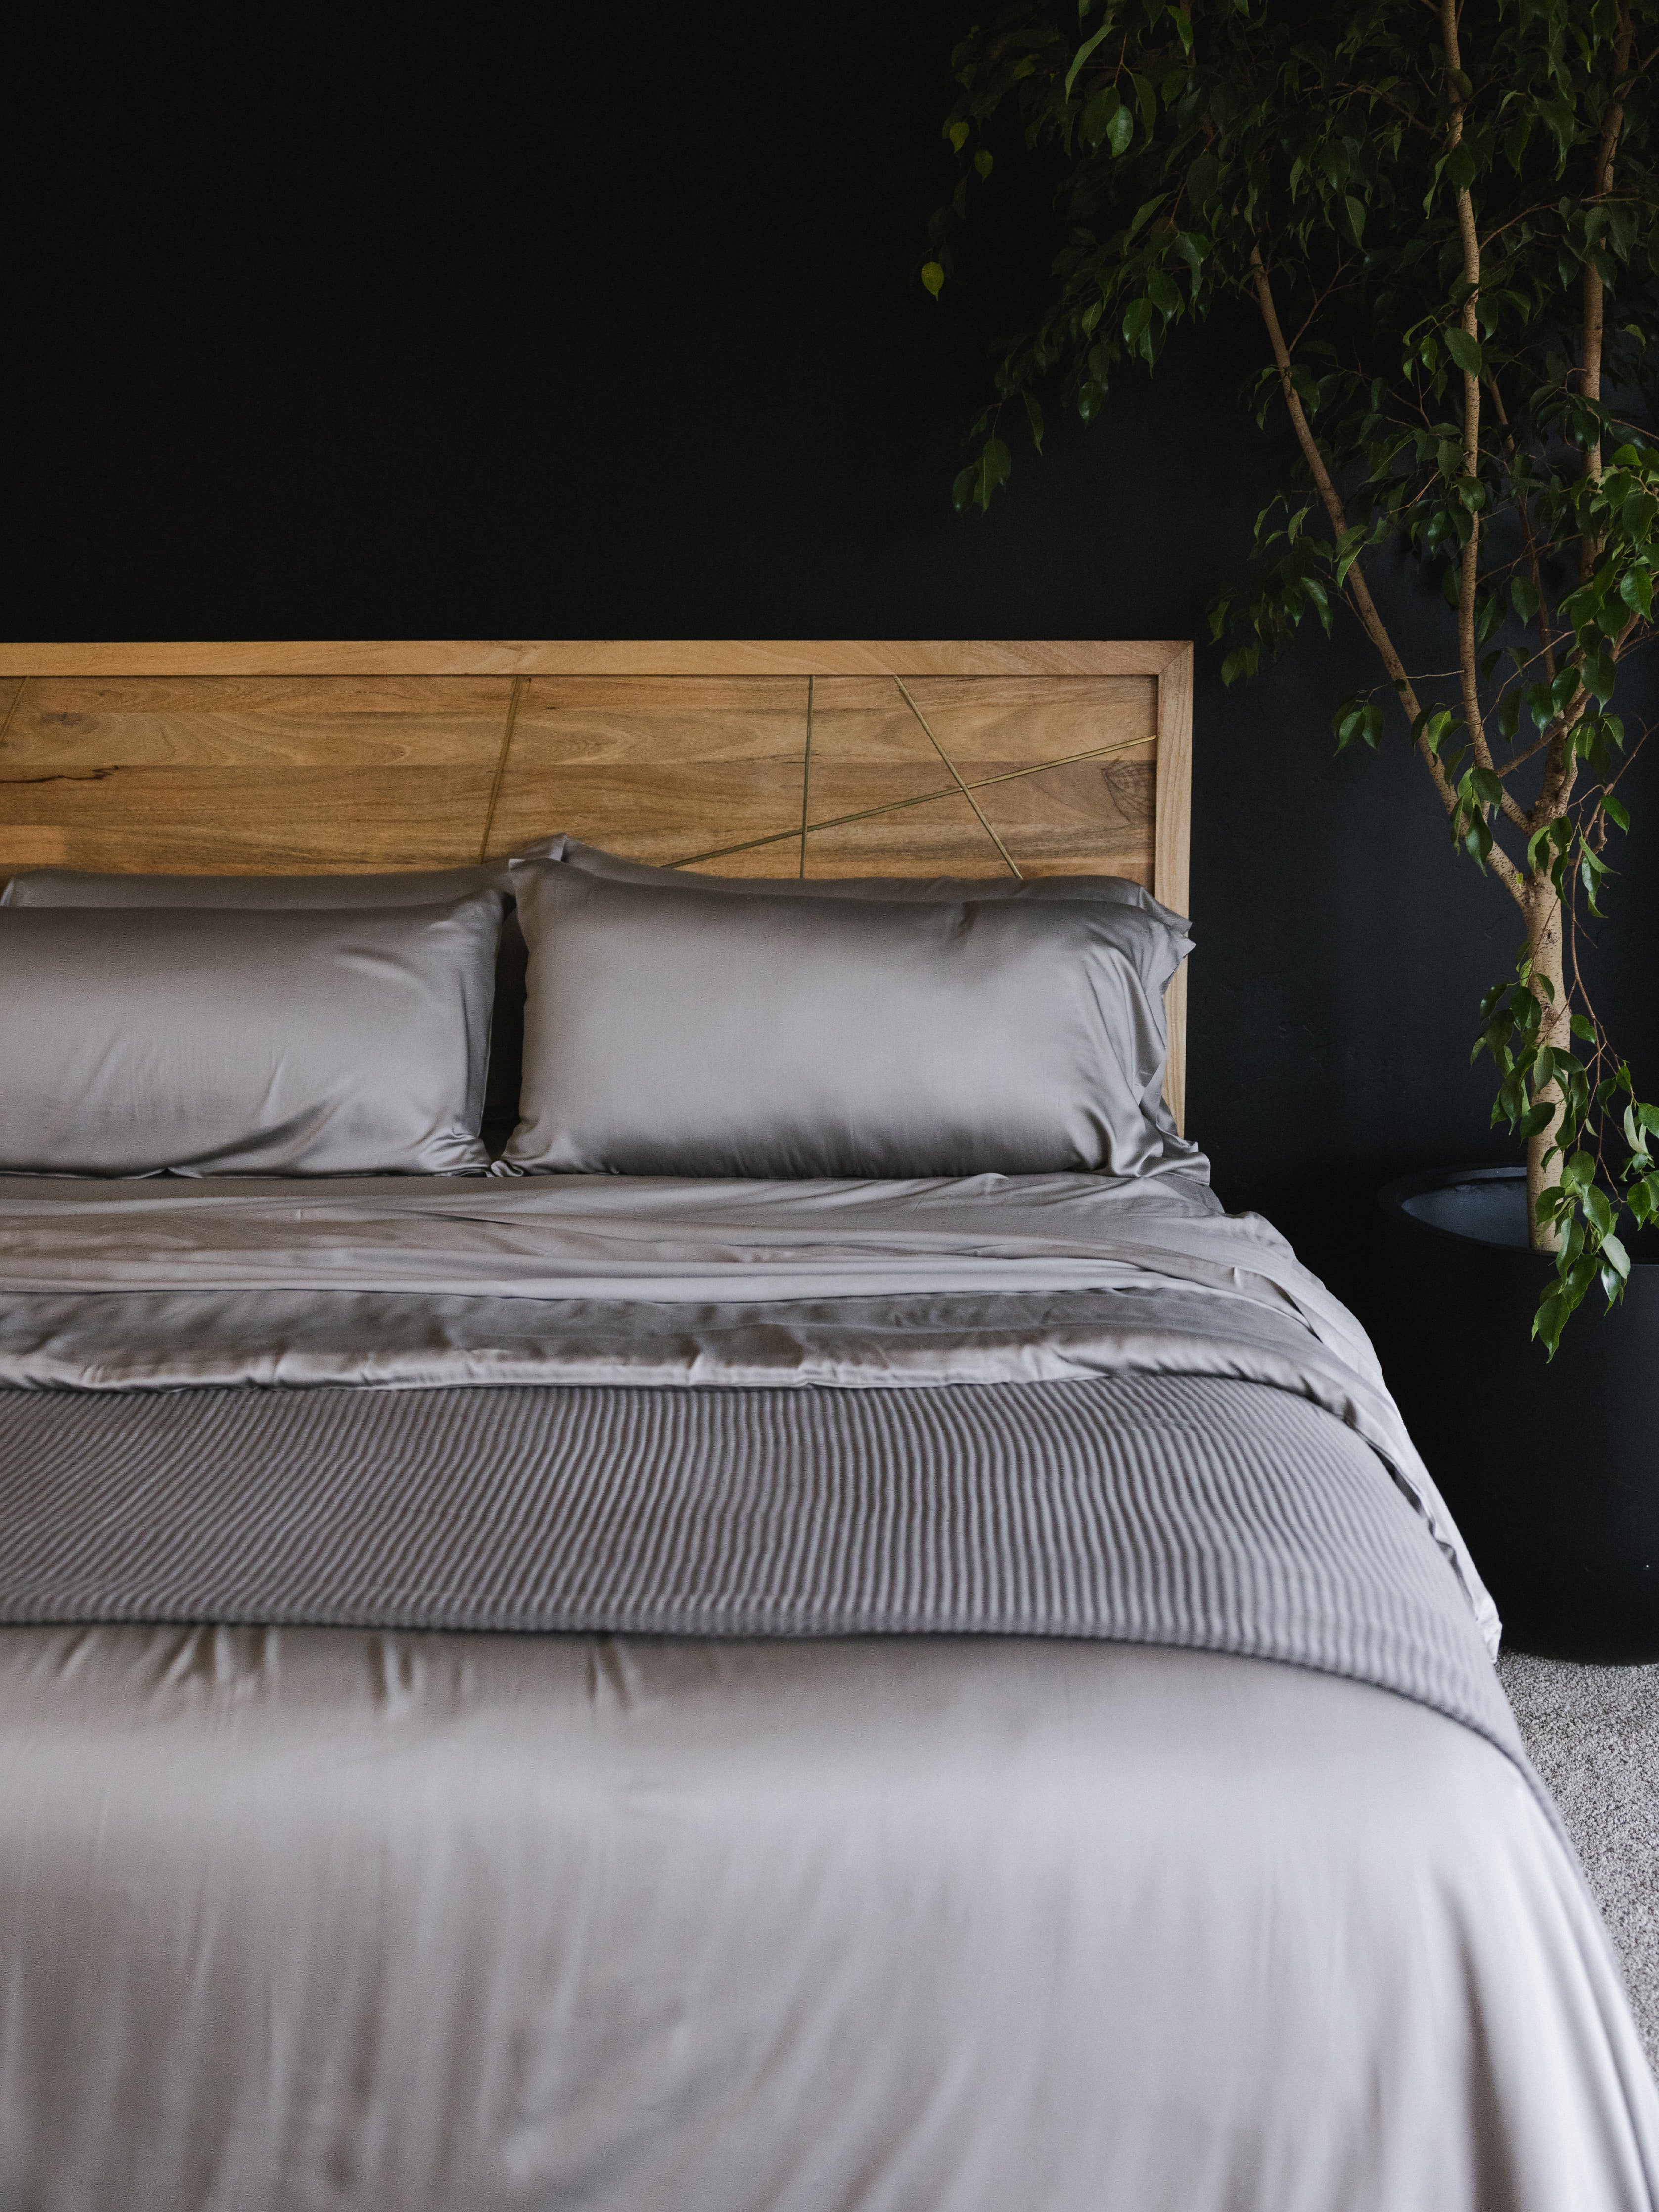 Dove Grey bedding on bed in room with dark walls |Color:Dove Grey